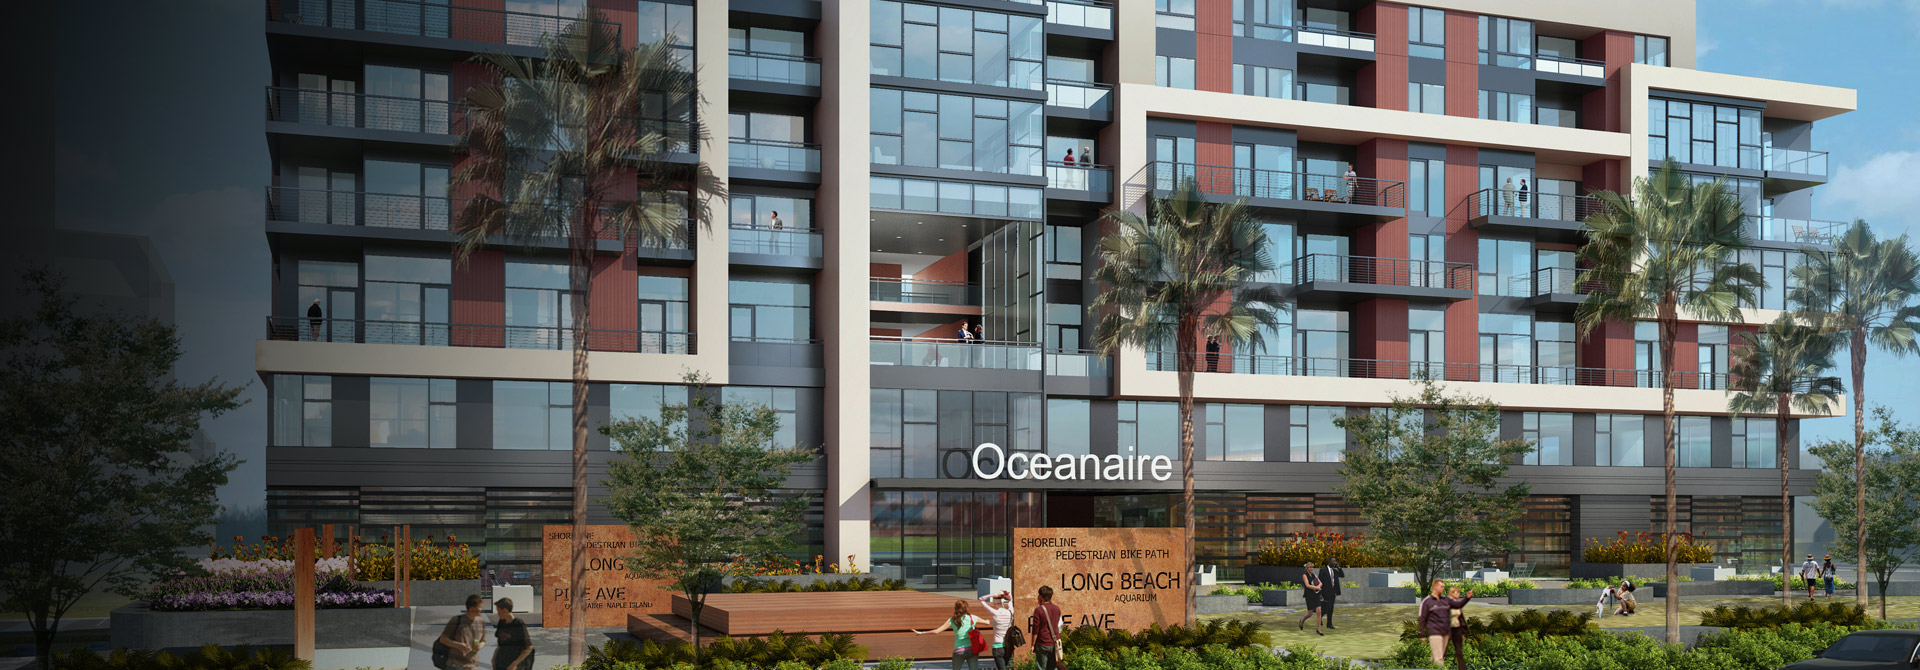 Oceanaire Apartments banner